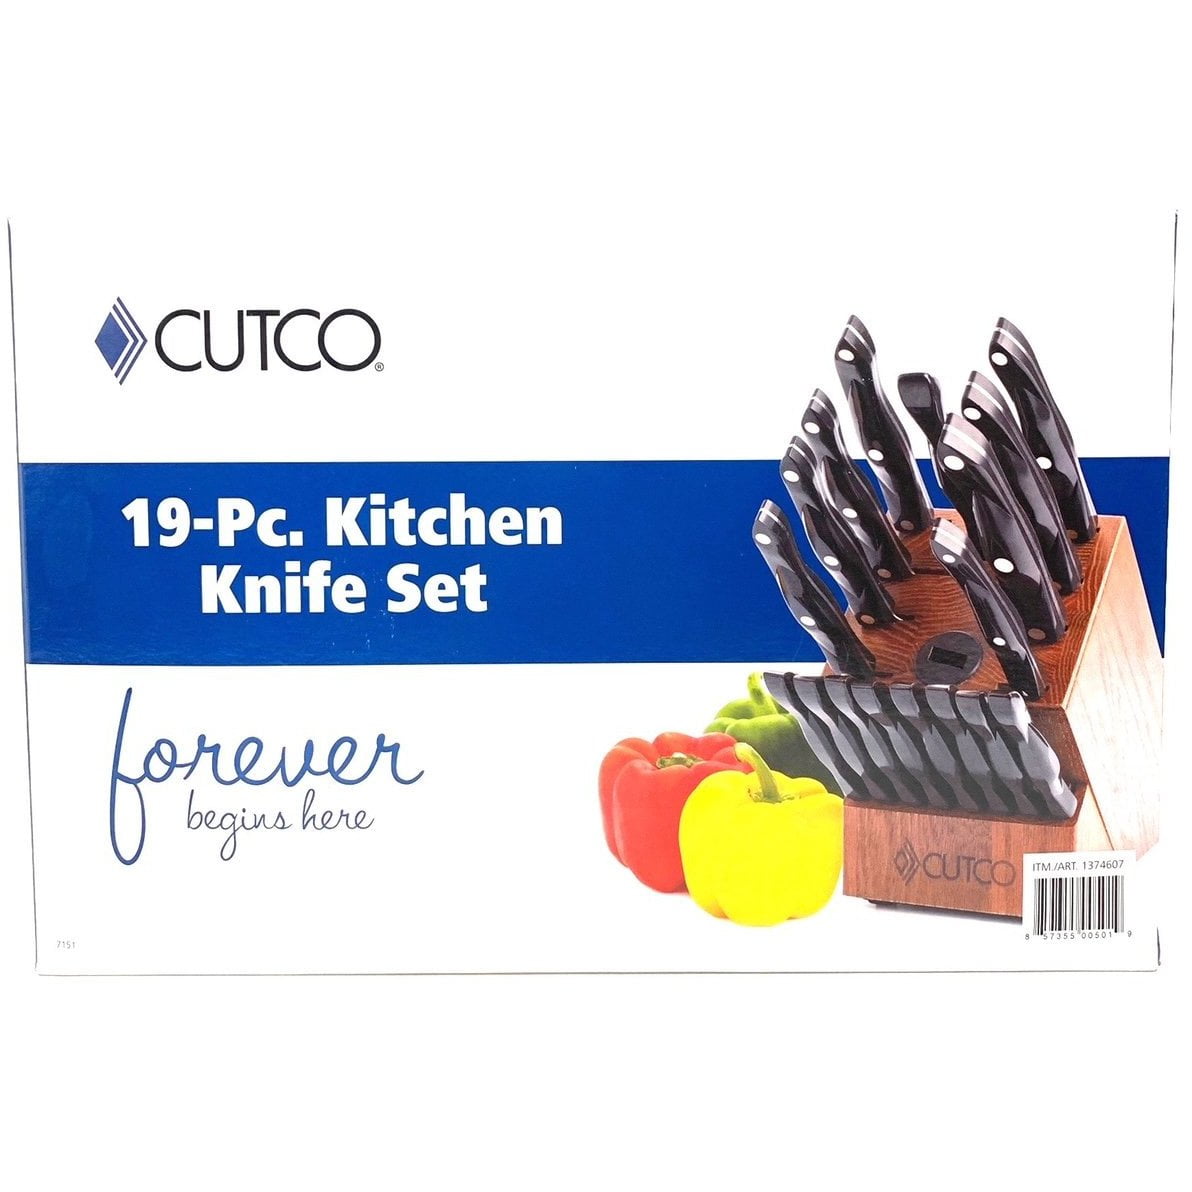  Cutco 21 Piece Kitchen Knife Set with Cherry Finish